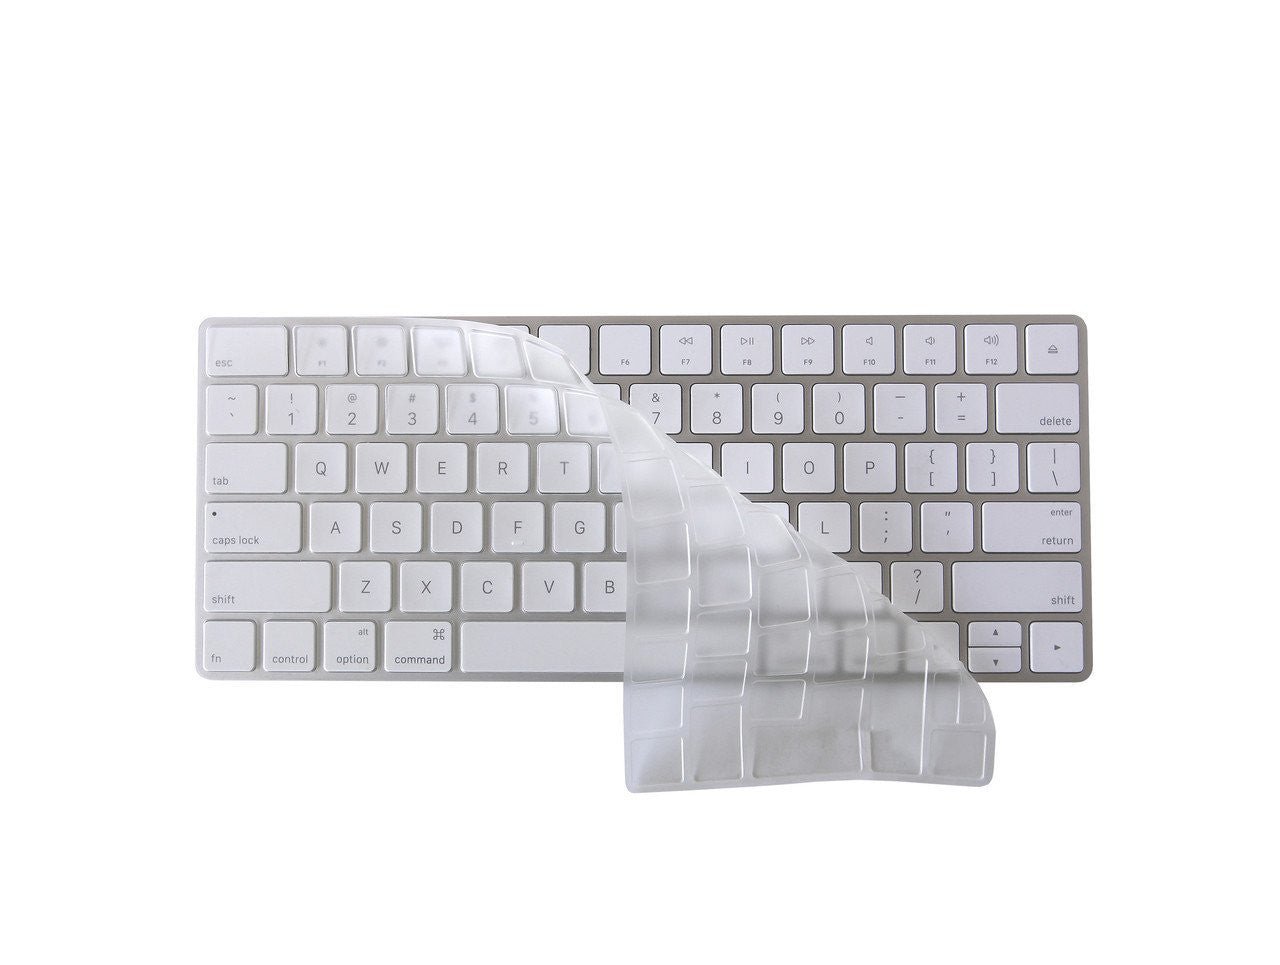 Clear Keyboard Covers For MacBook and iMac - Editors Keys